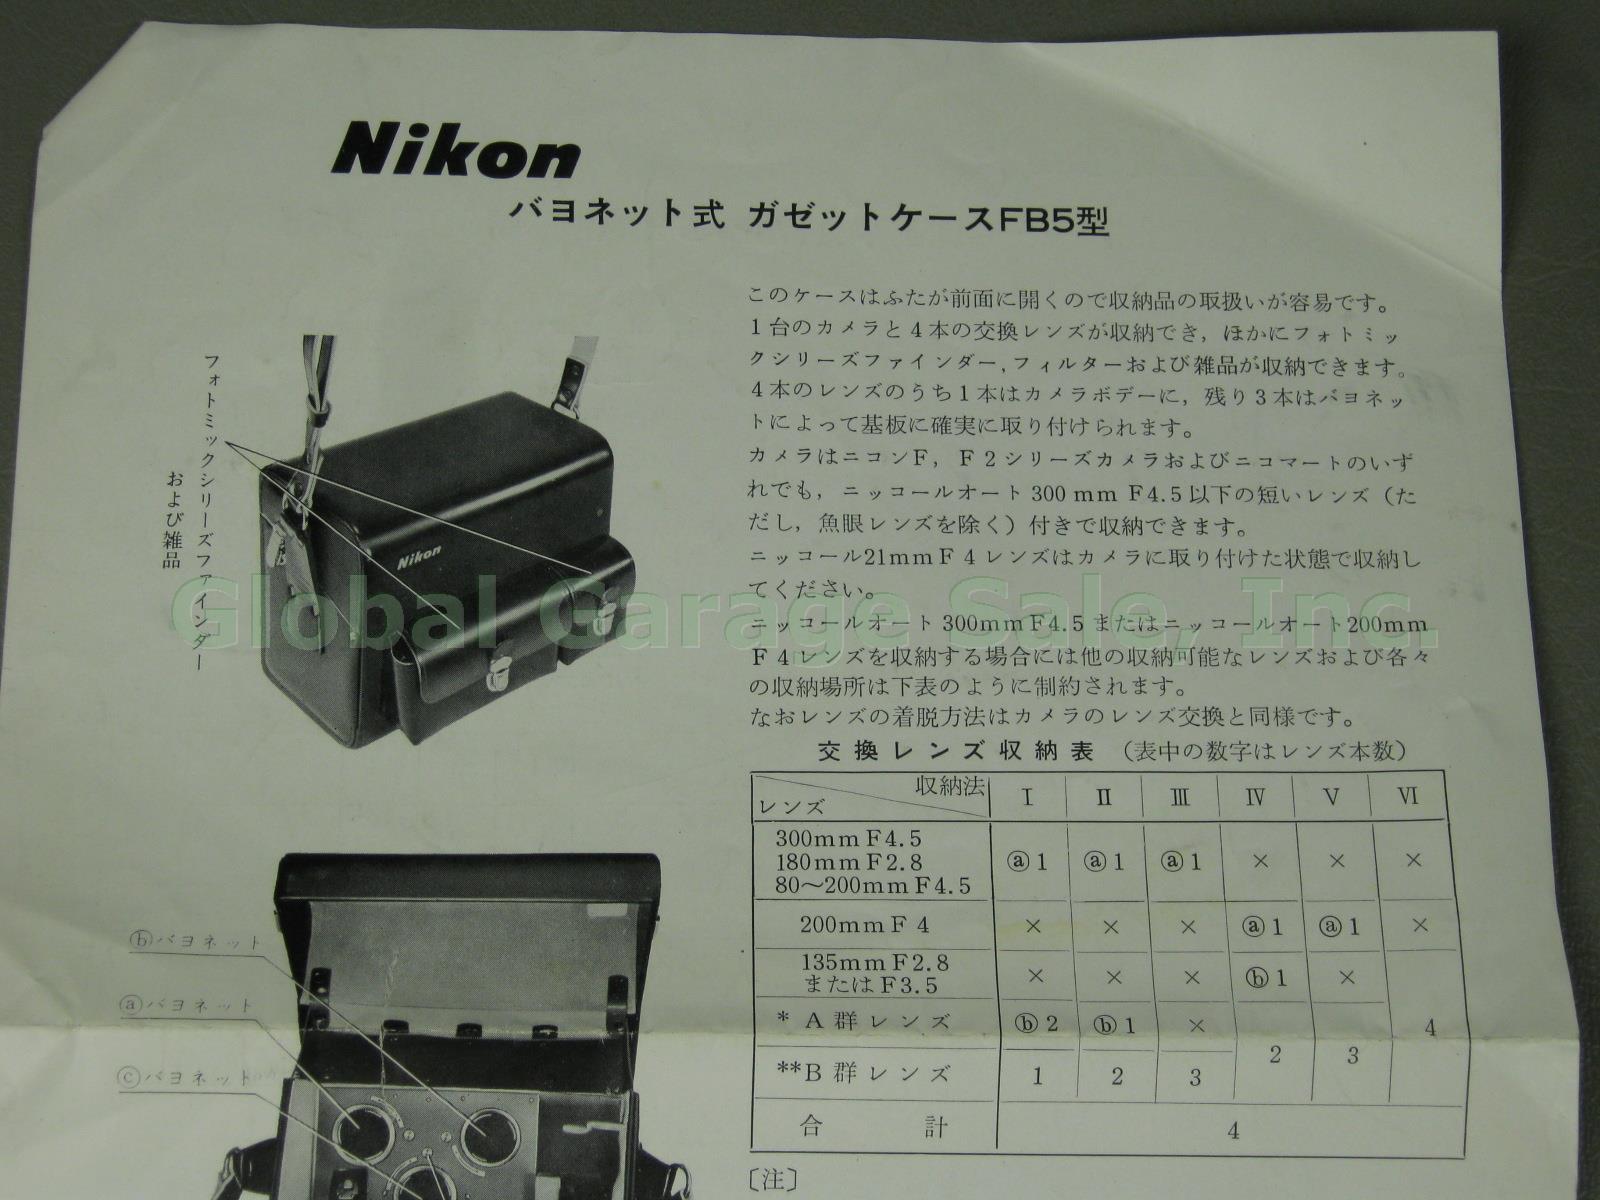 Nikkormat EL + Nikkor-Q 200mm 1:4 Zoom Lens Nikon FB5 Case Kiron 35-135mm Macro 23